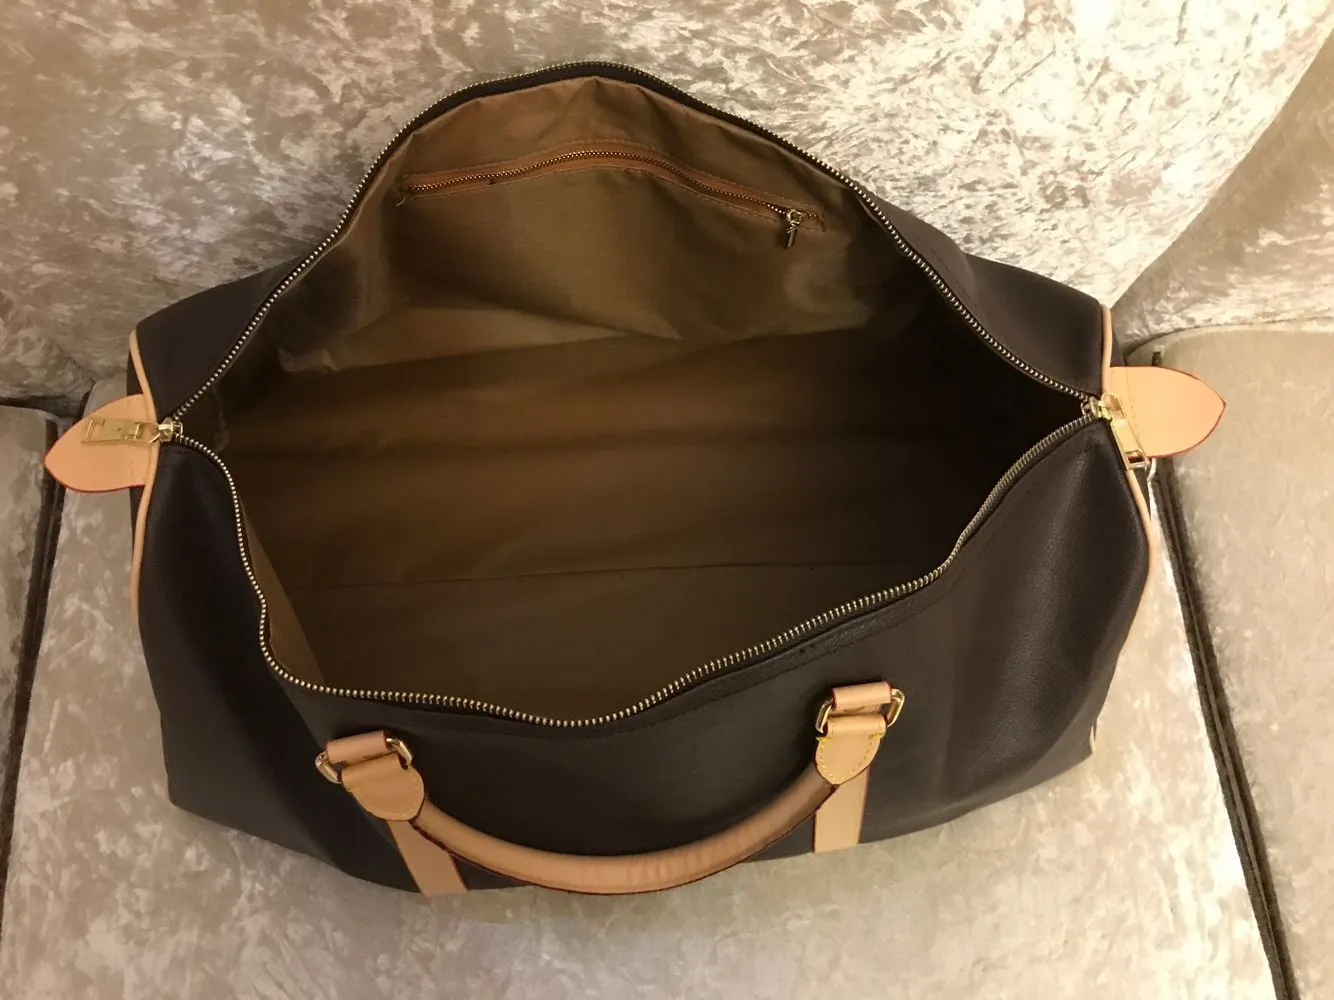 2019 men duffle bag women travel bags hand luggage travel bag men pu leather handbags large cross body bag totes 55cm